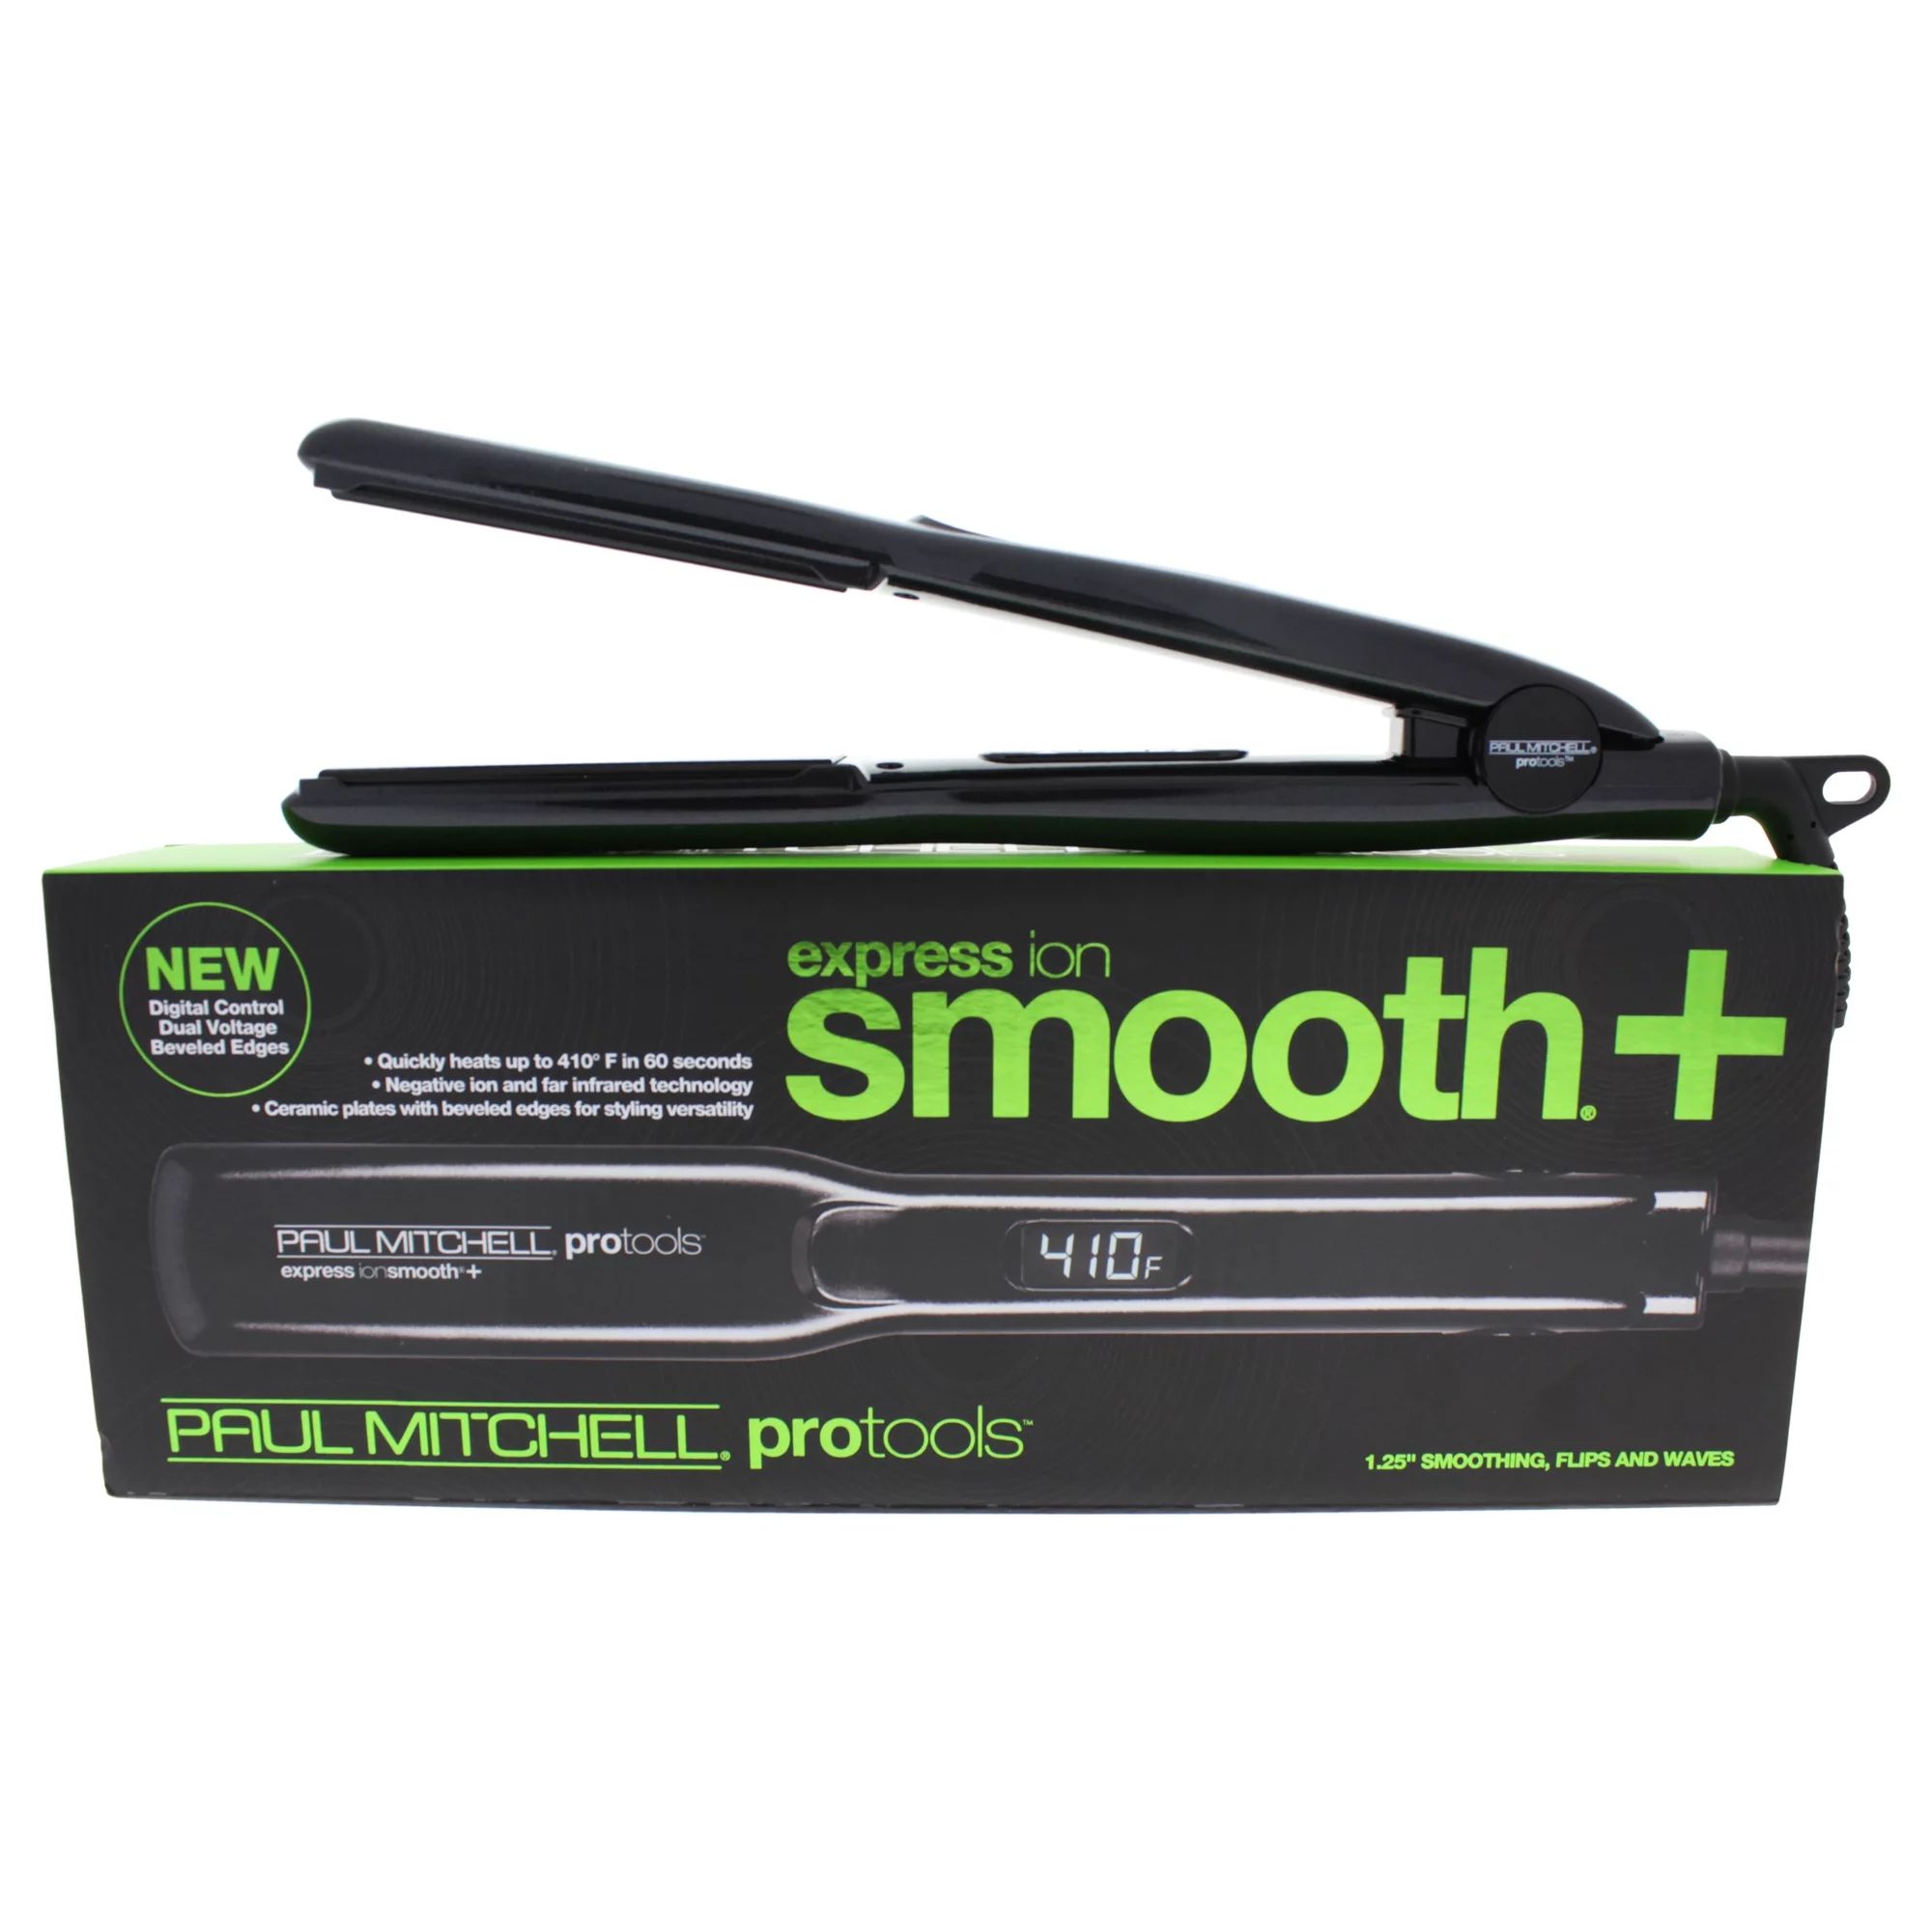 Paul Mitchell Express Ion Smooth Hair Straightening Flat Iron, Black 1.25" | Walmart (US)